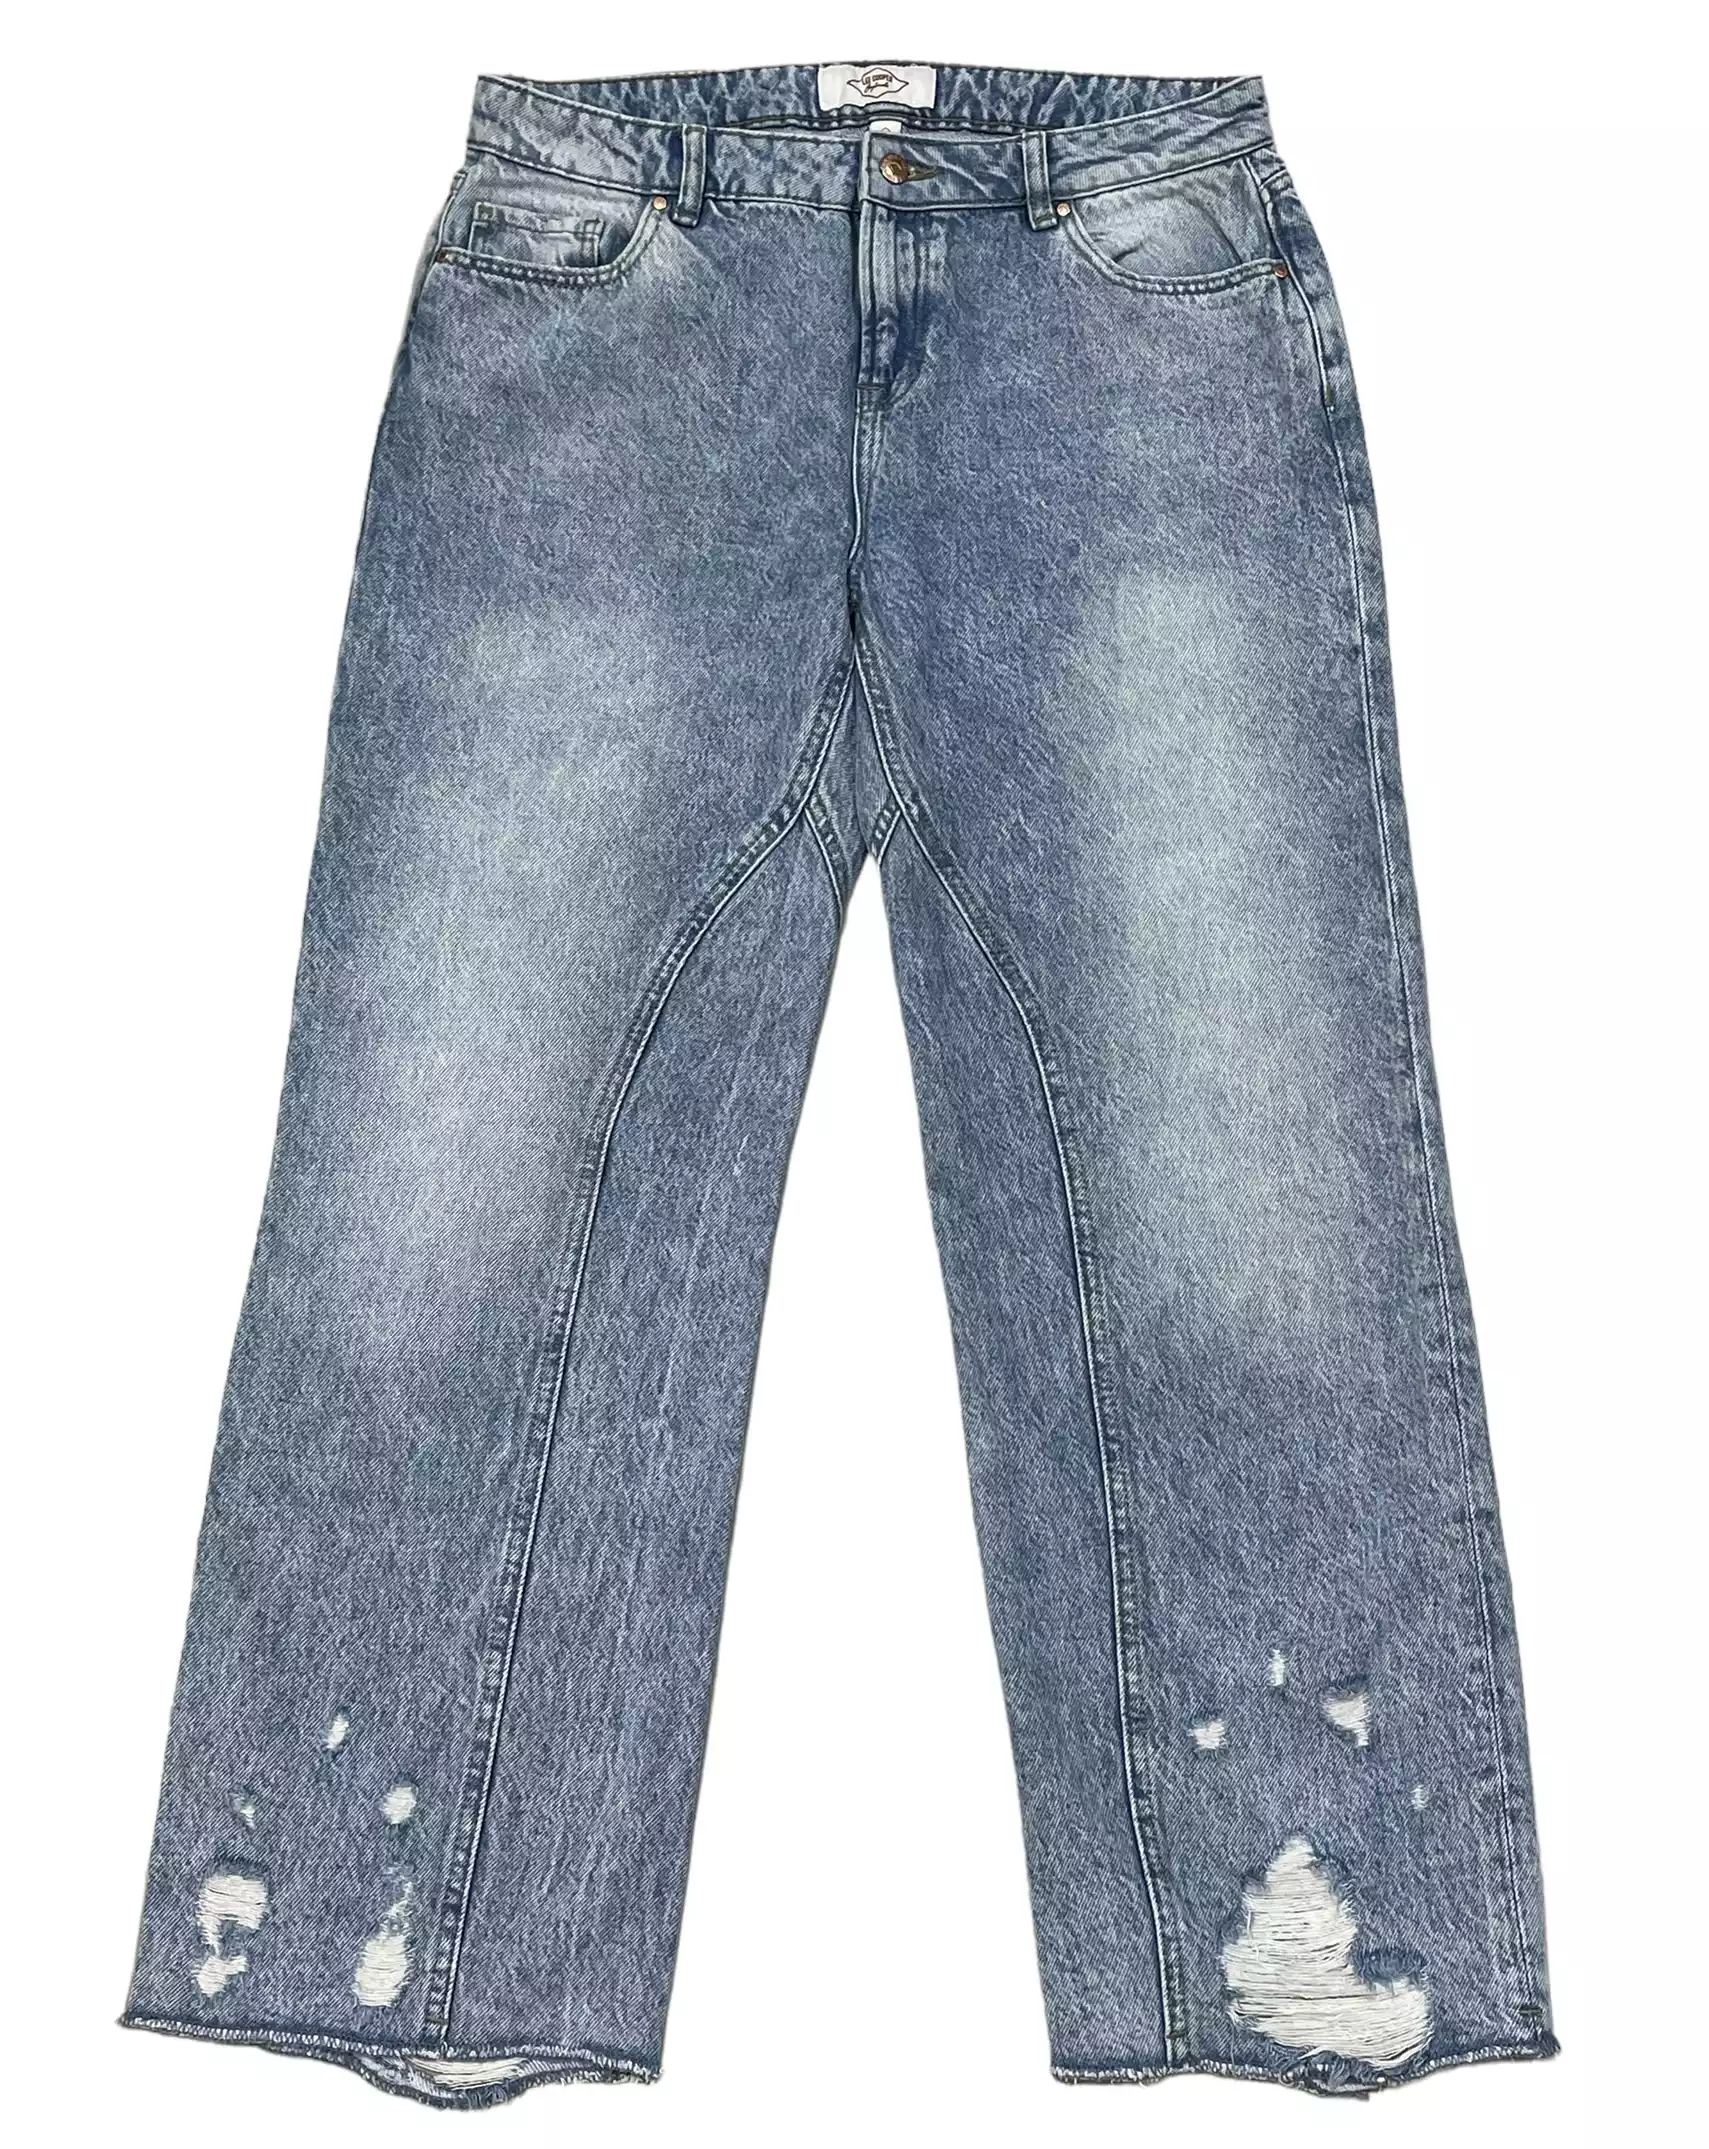 Denim Jeans by Lee Cooper